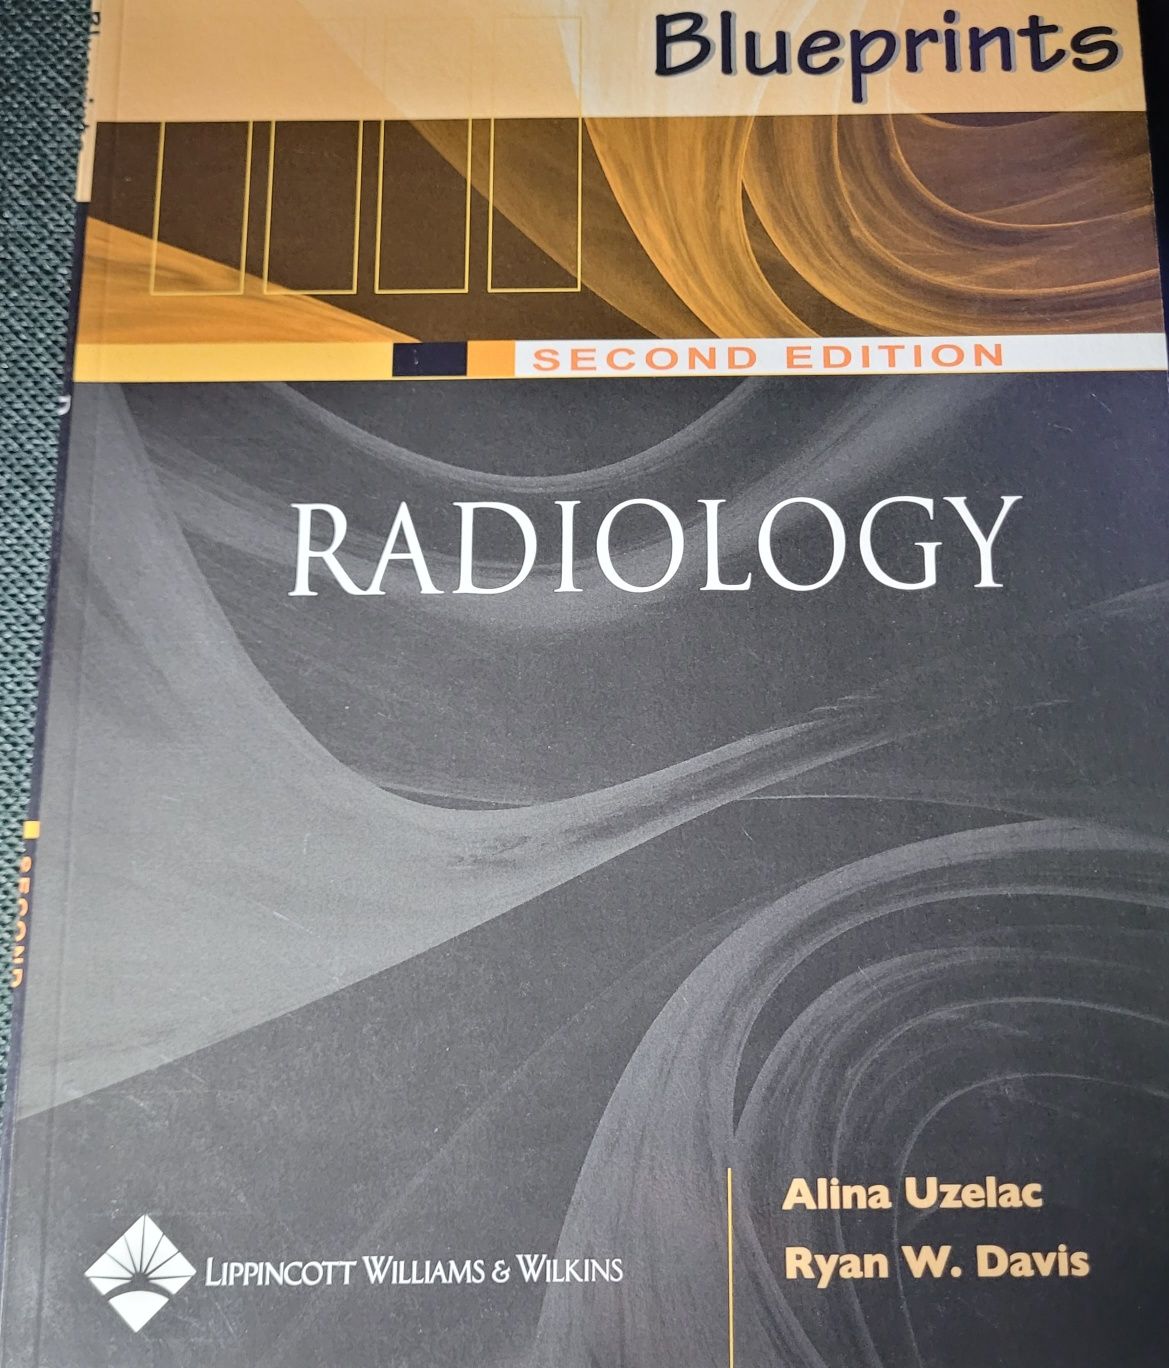 RADIOLOGY Alina Uzelac, Ryan W. Davis, 2 Edition